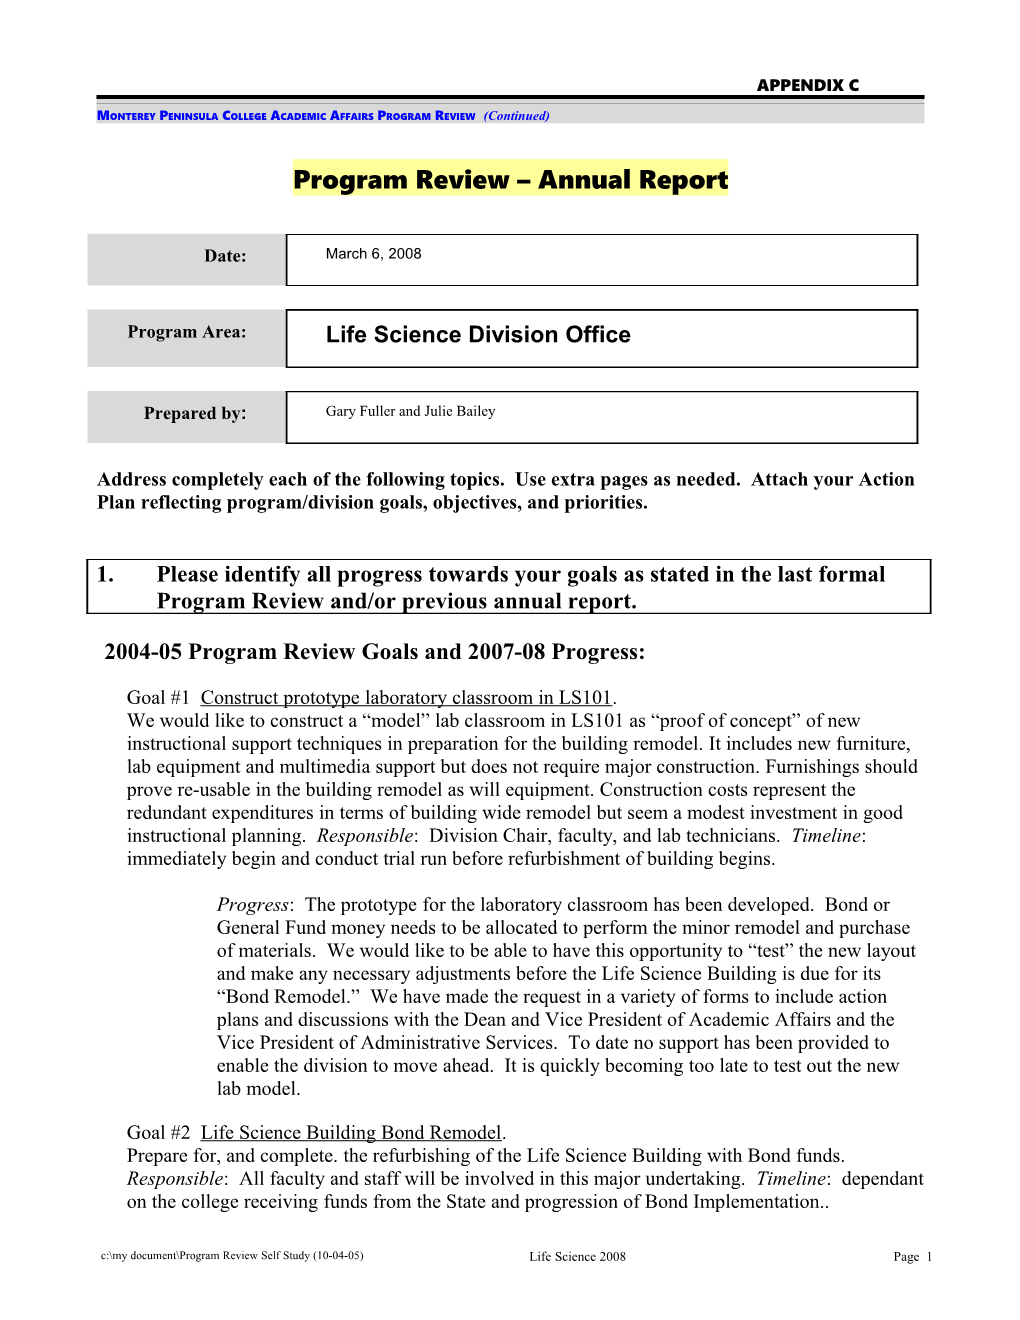 Montereypeninsulacollege Academic Affairs Program Review (Continued)